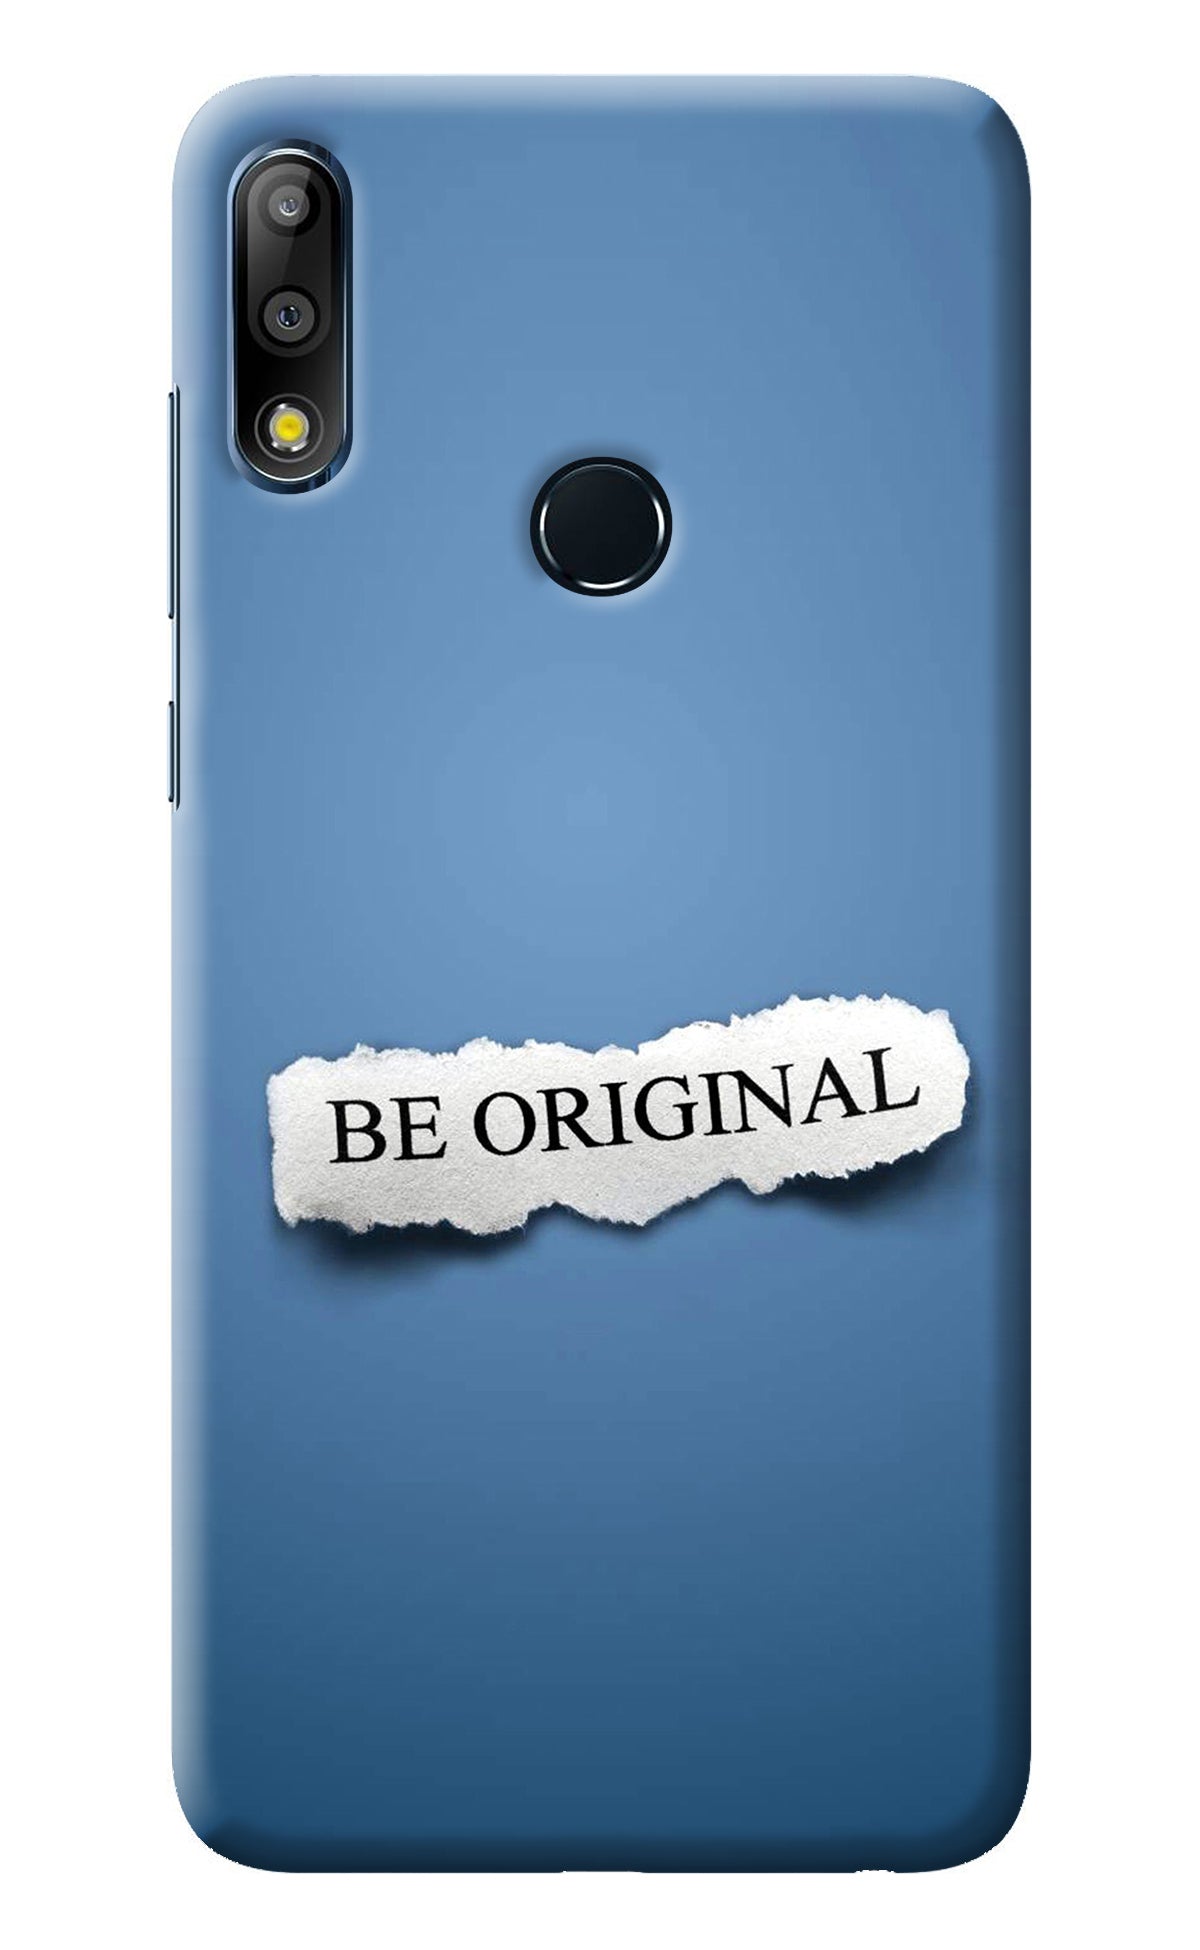 Be Original Asus Zenfone Max Pro M2 Back Cover